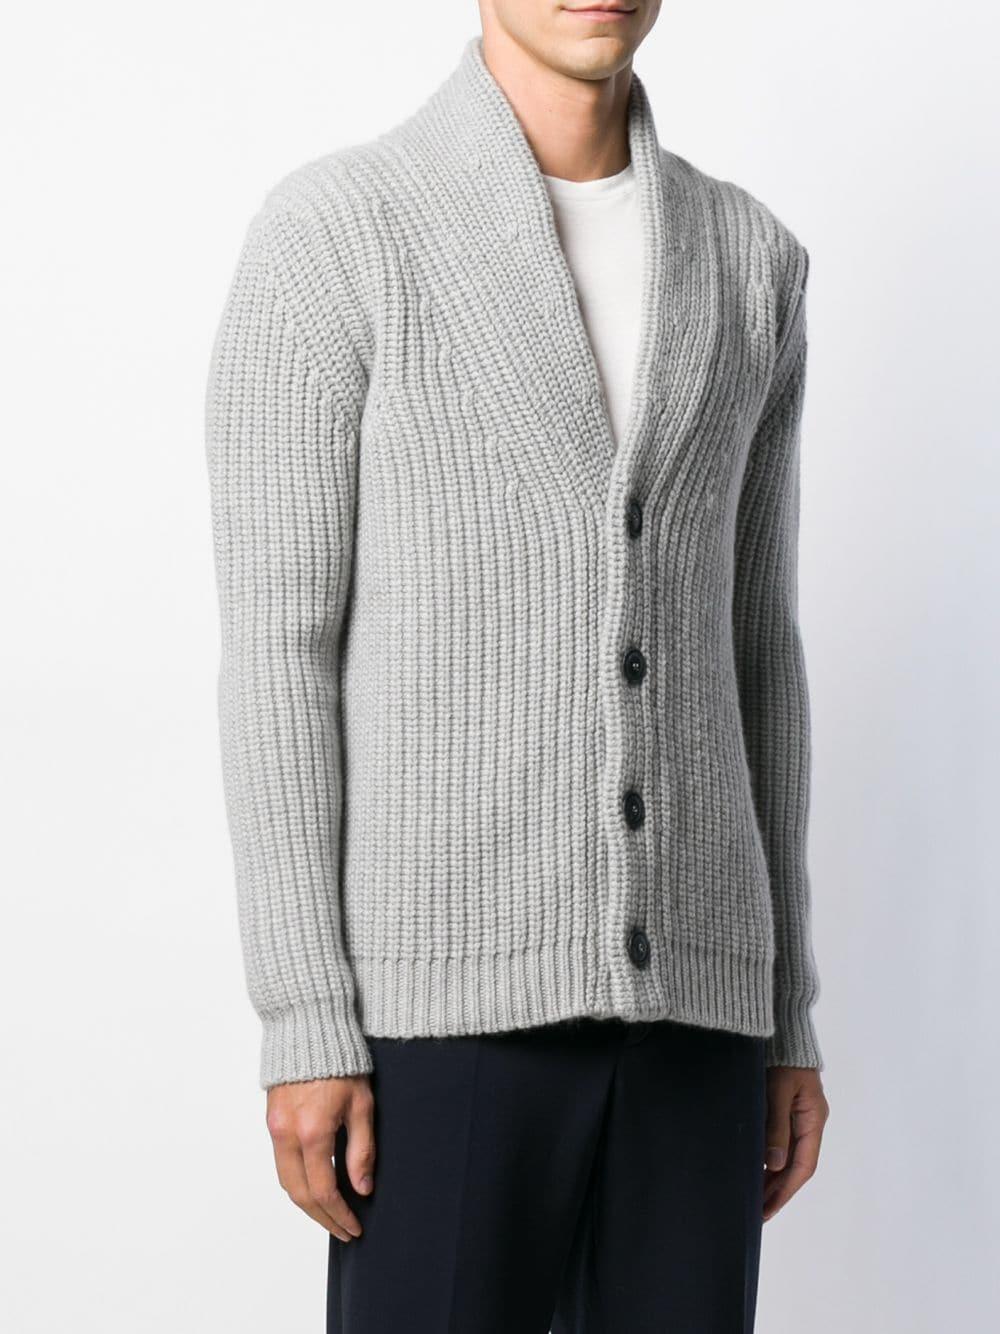 Al Duca d'Aosta Grey Wool Cardigan in Gray for Men - Save 9% - Lyst